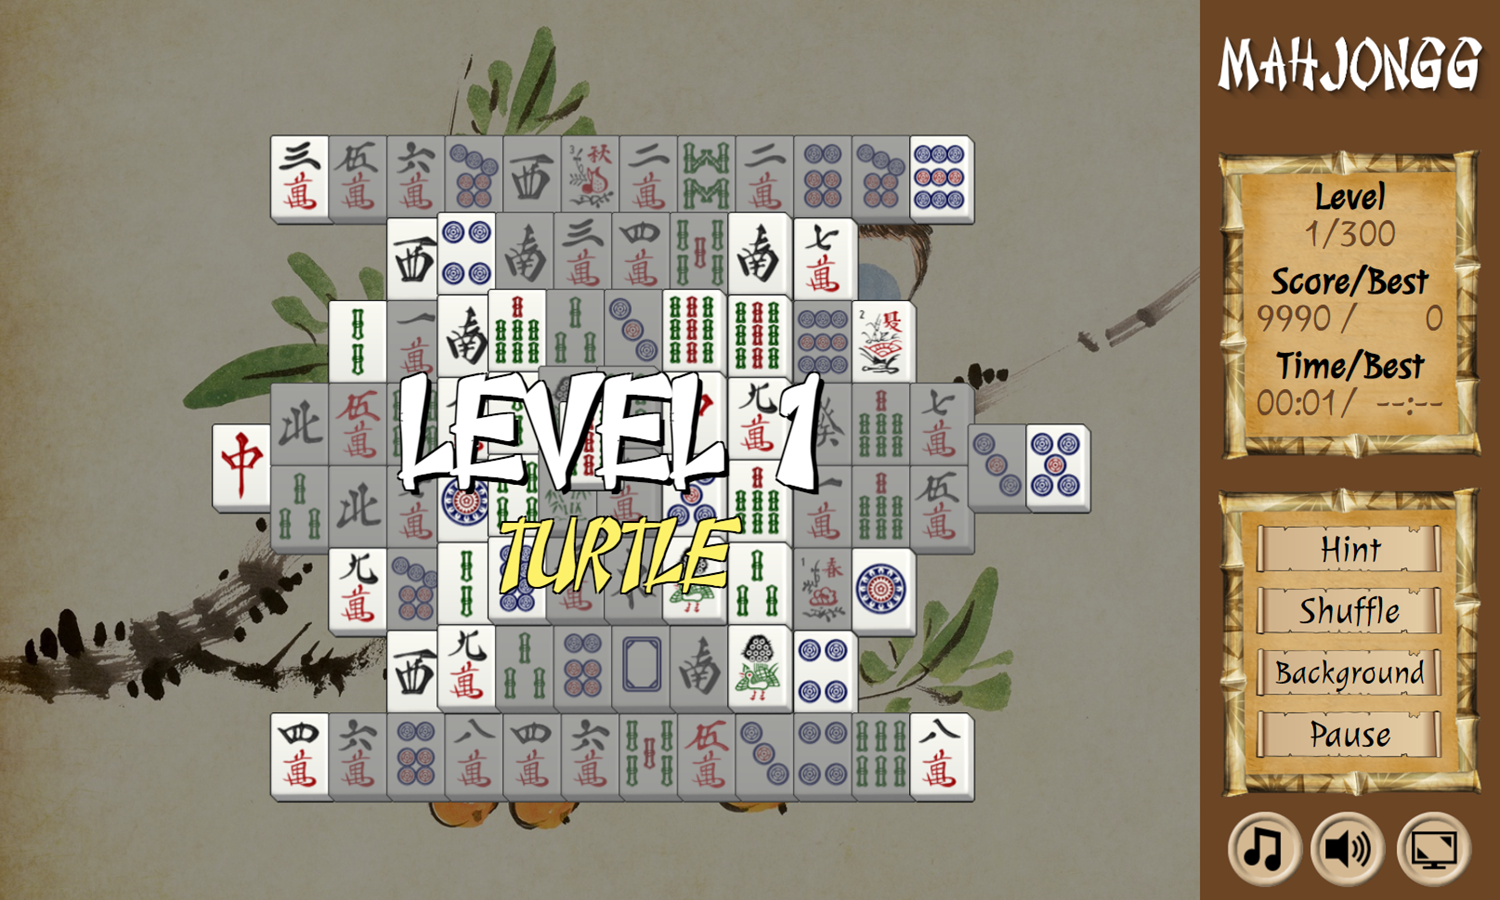 Mahjongg Game Level Start Screenshot.